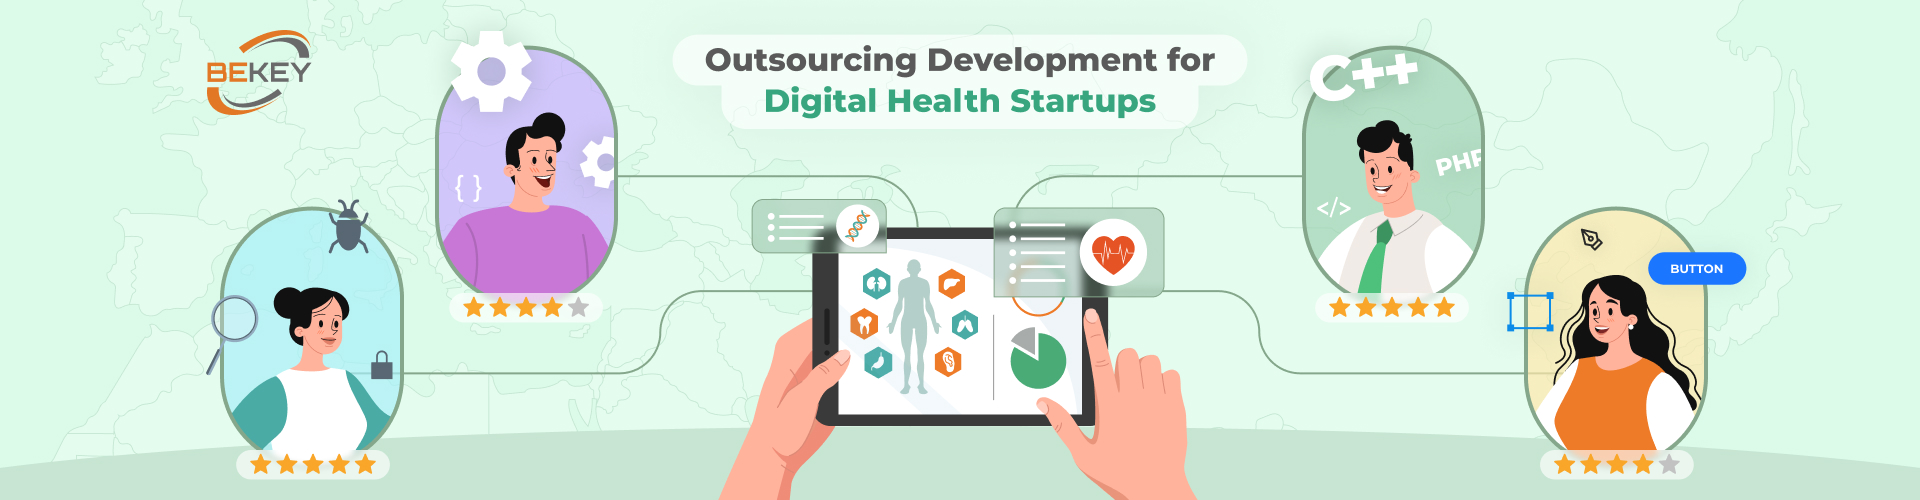 Outsourcing Development for Digital Health Startups - image